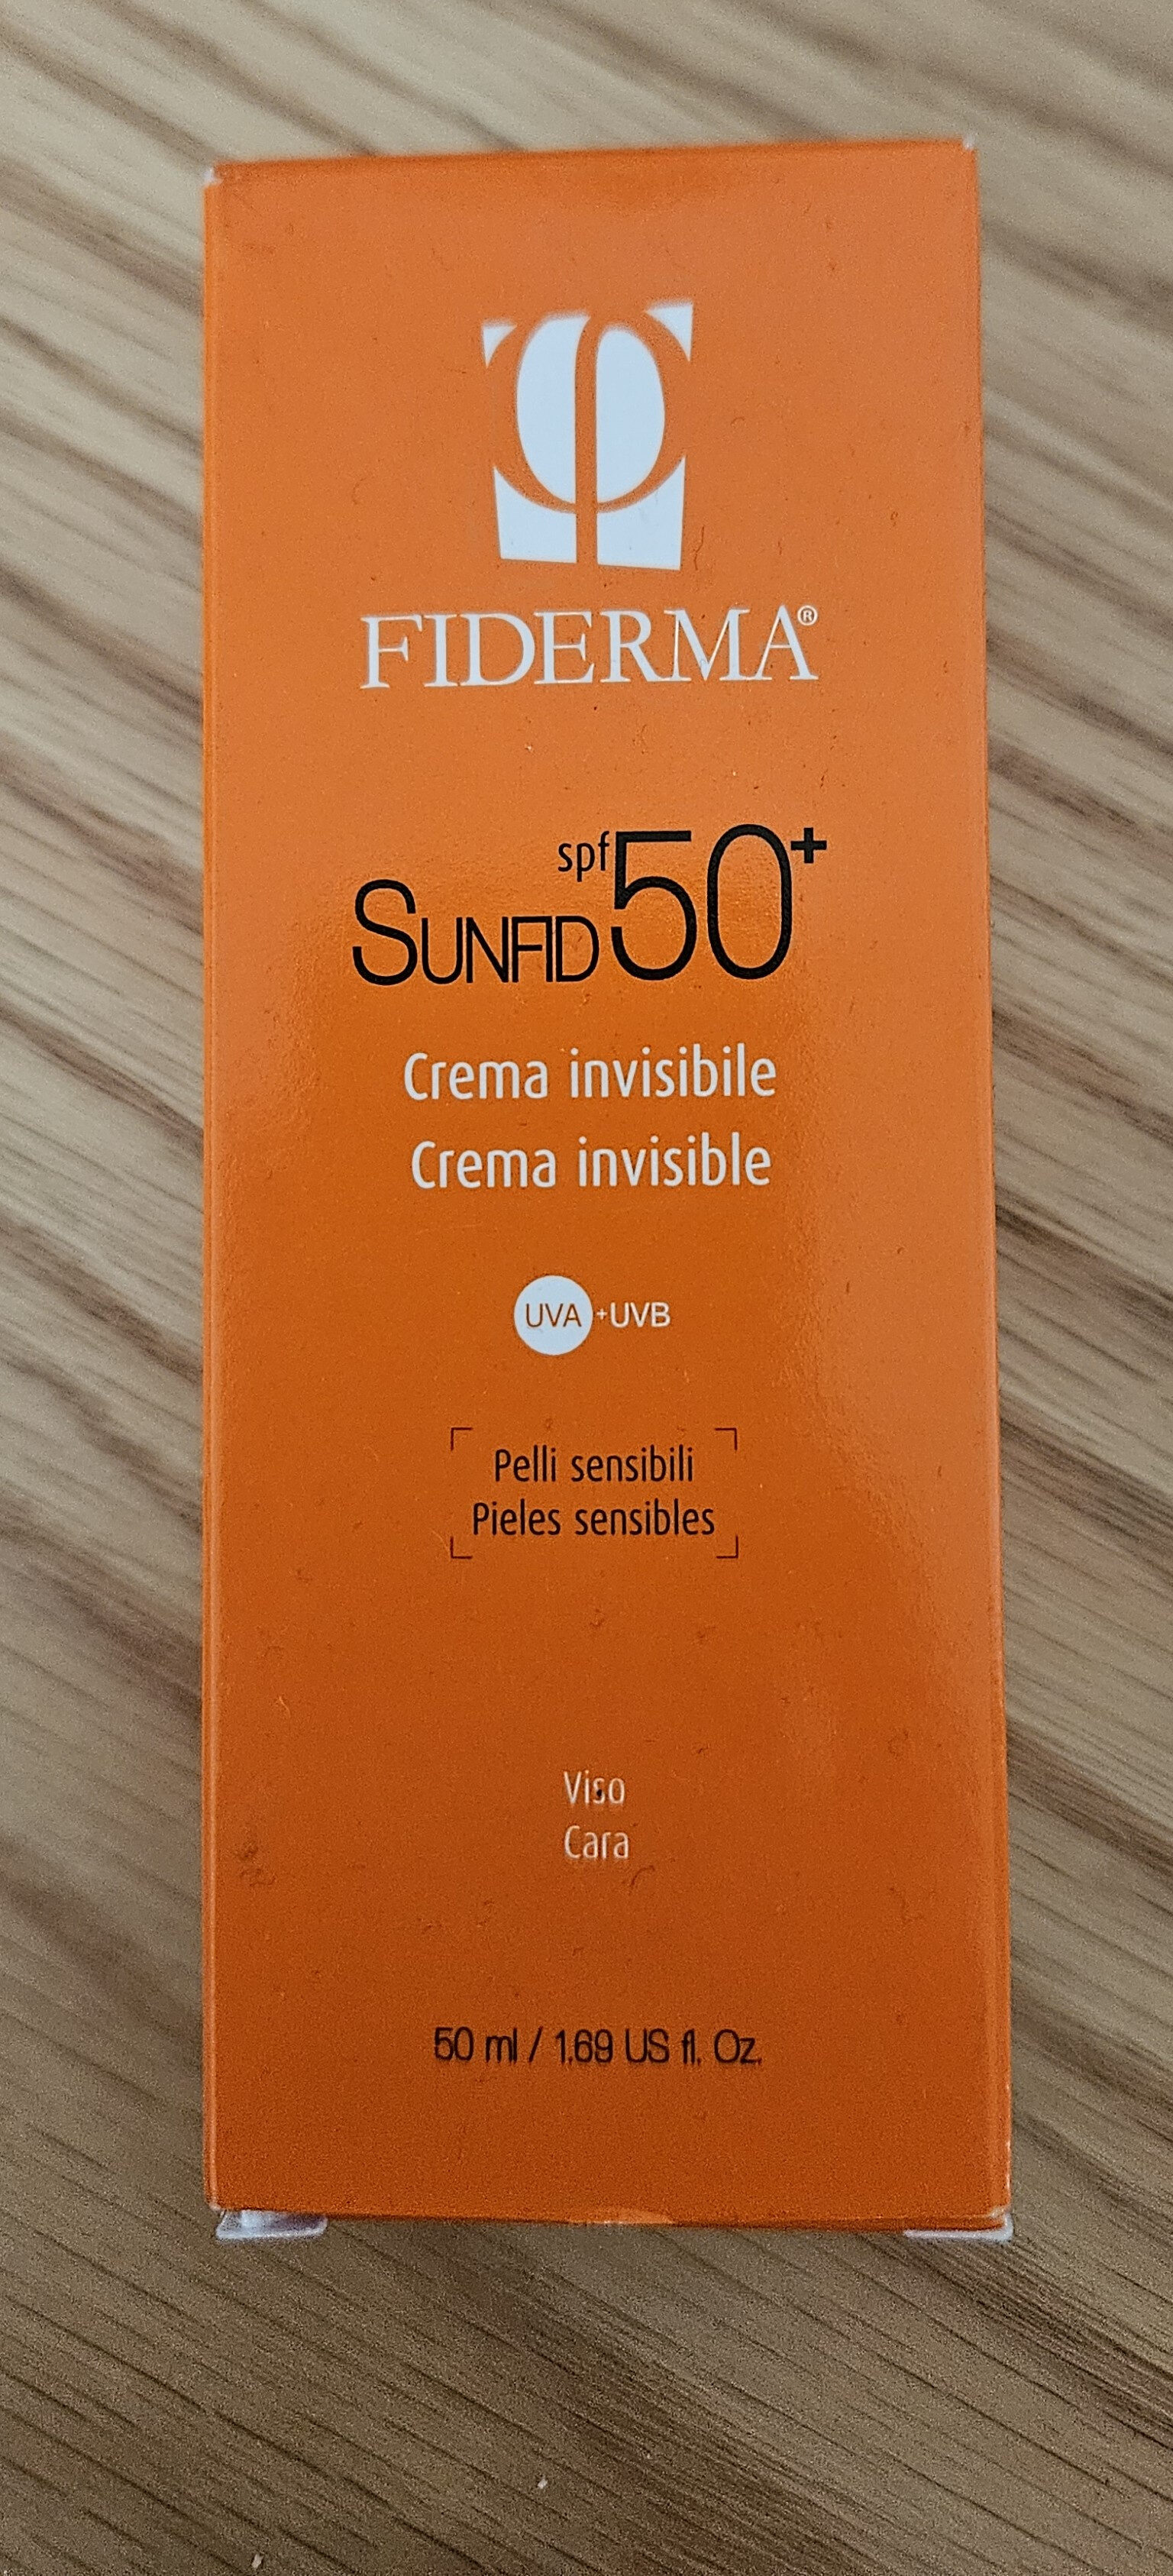 Sunfid spf50+ - Produkt - en